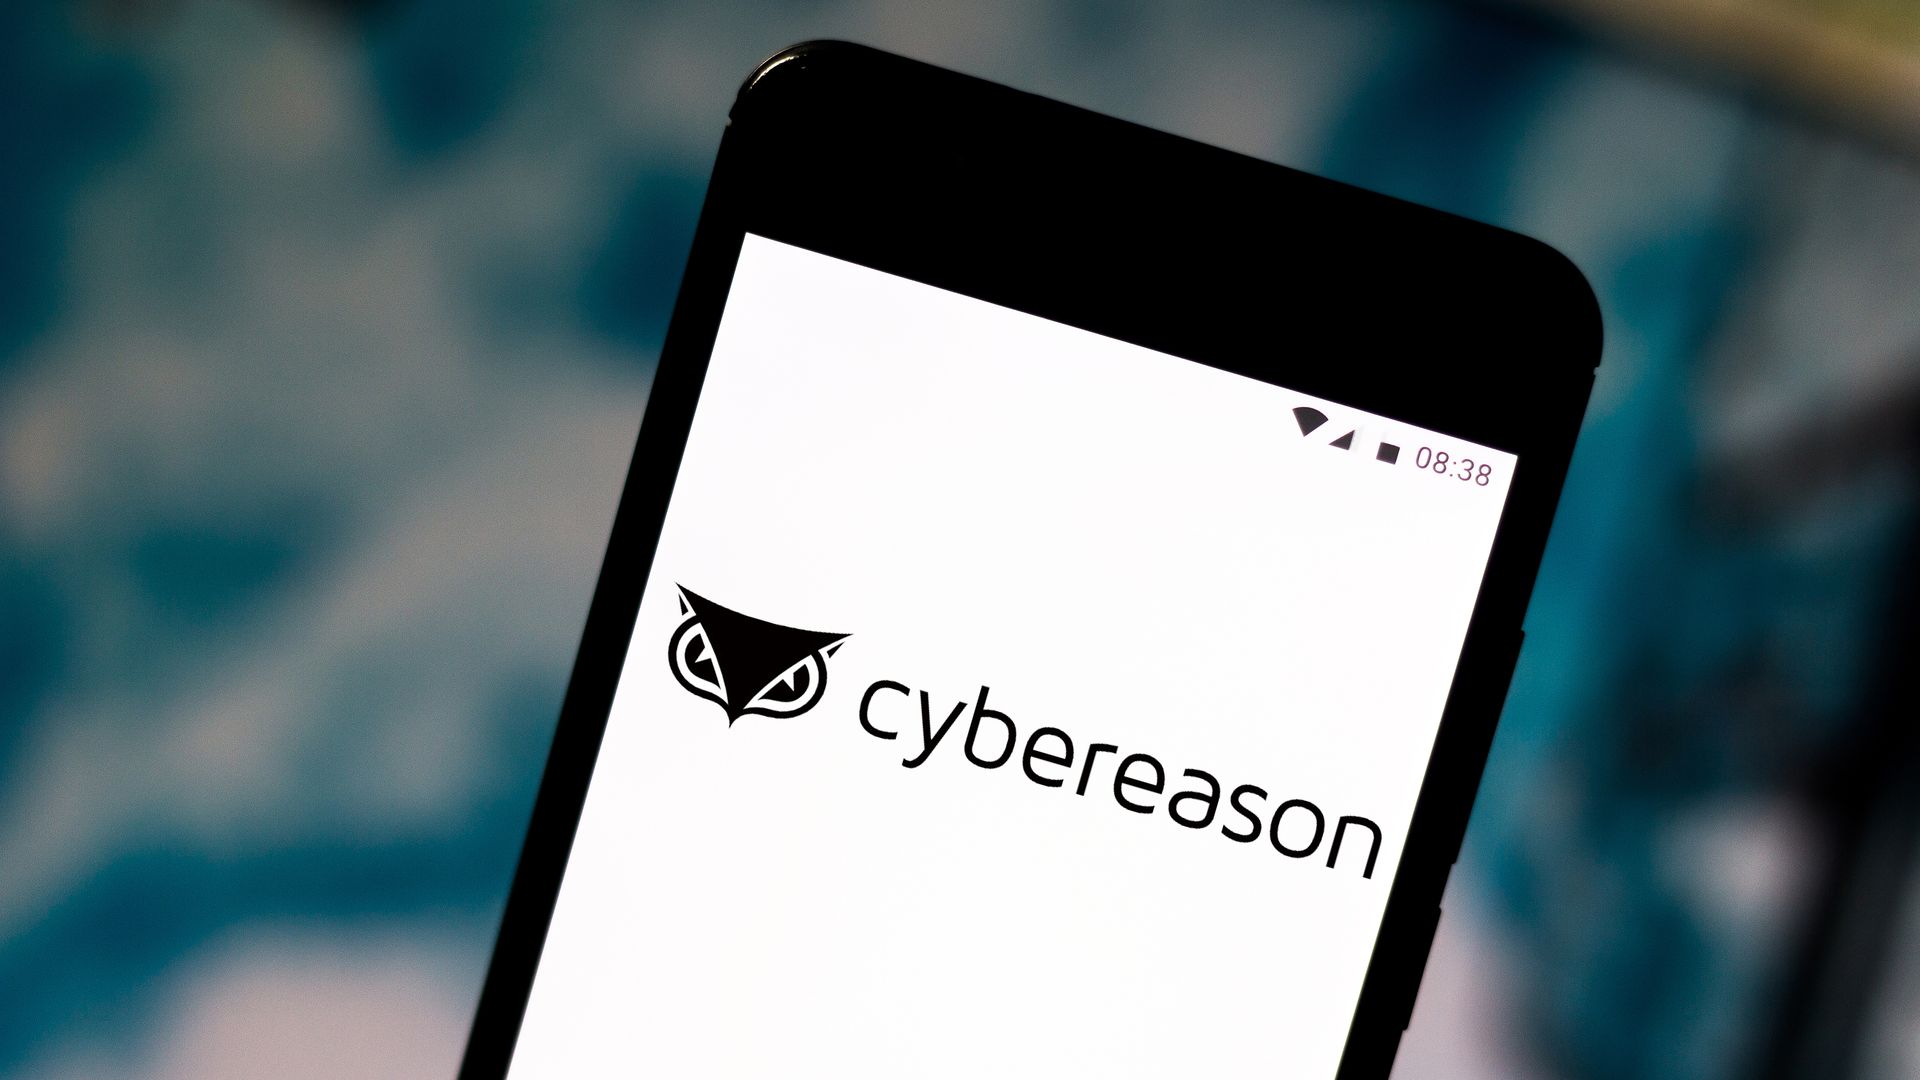 Cybereason logo on a mobile phone.